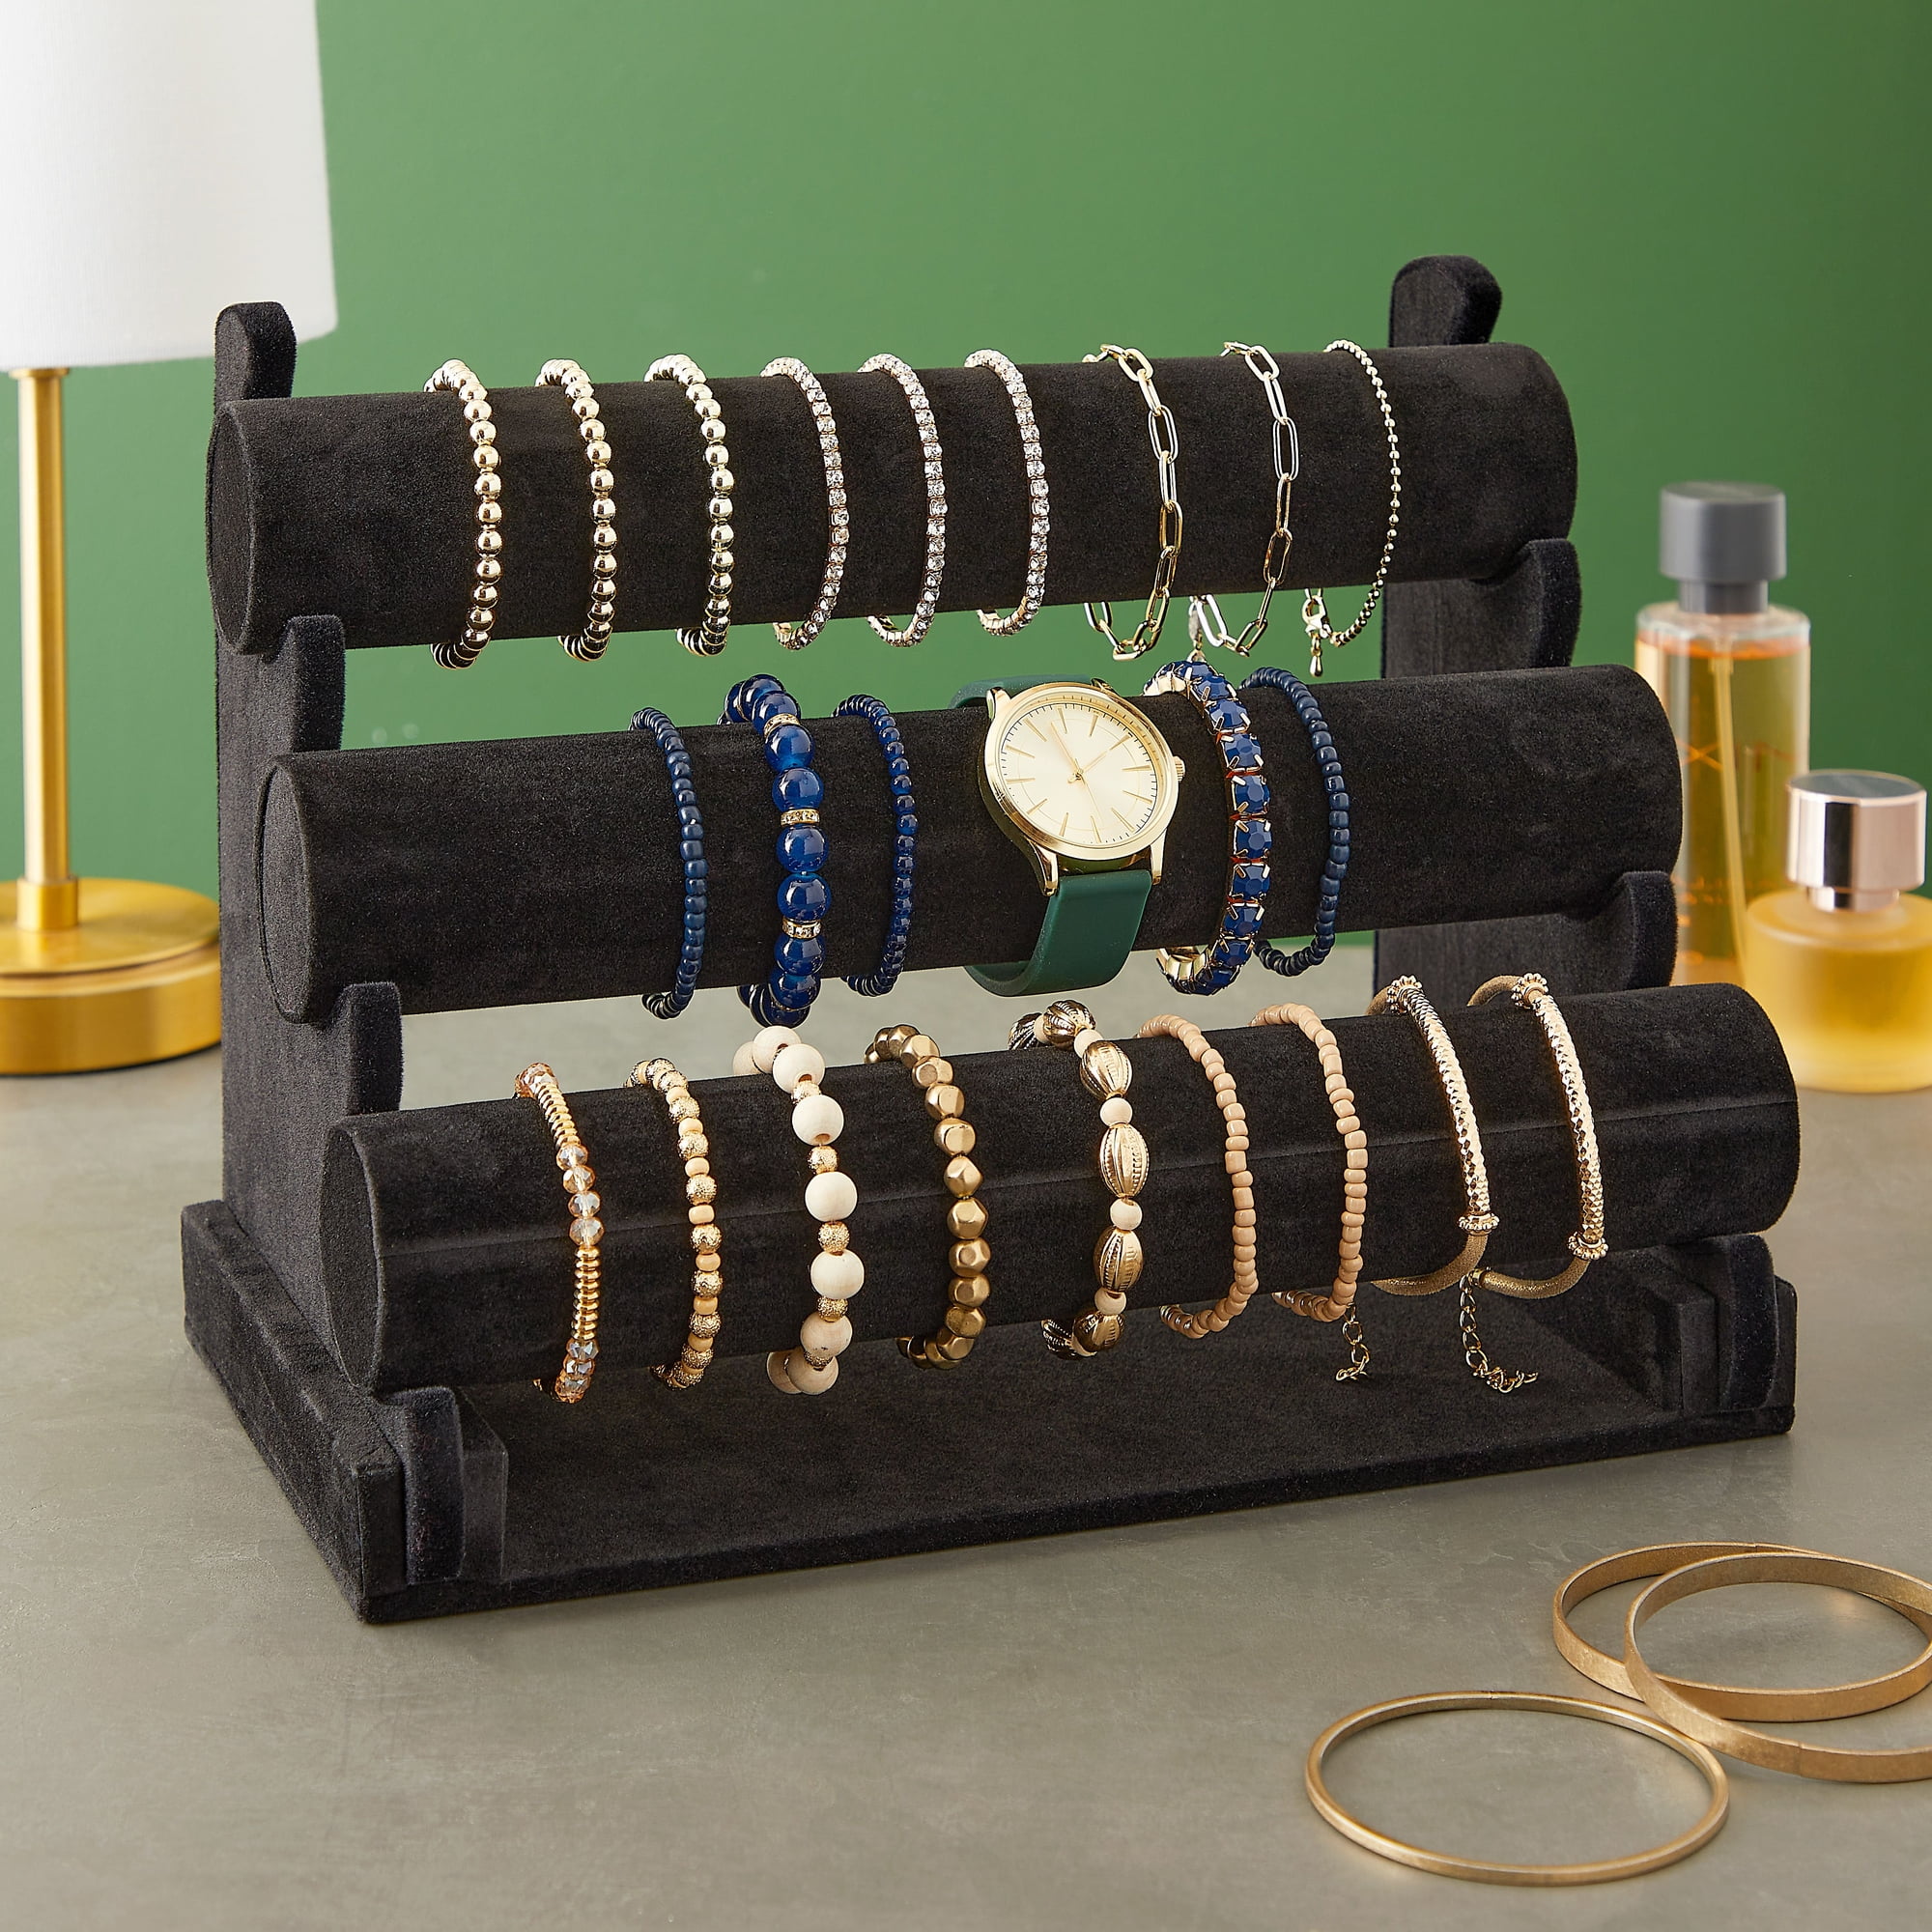 UUJOY 3 Tiers Bracelet Holder, Velvet Detachable Jewelry Display Stand,  Bracelet Storage Organizer with Wooden Tray, Bracelet Stand for Watch  Bangle